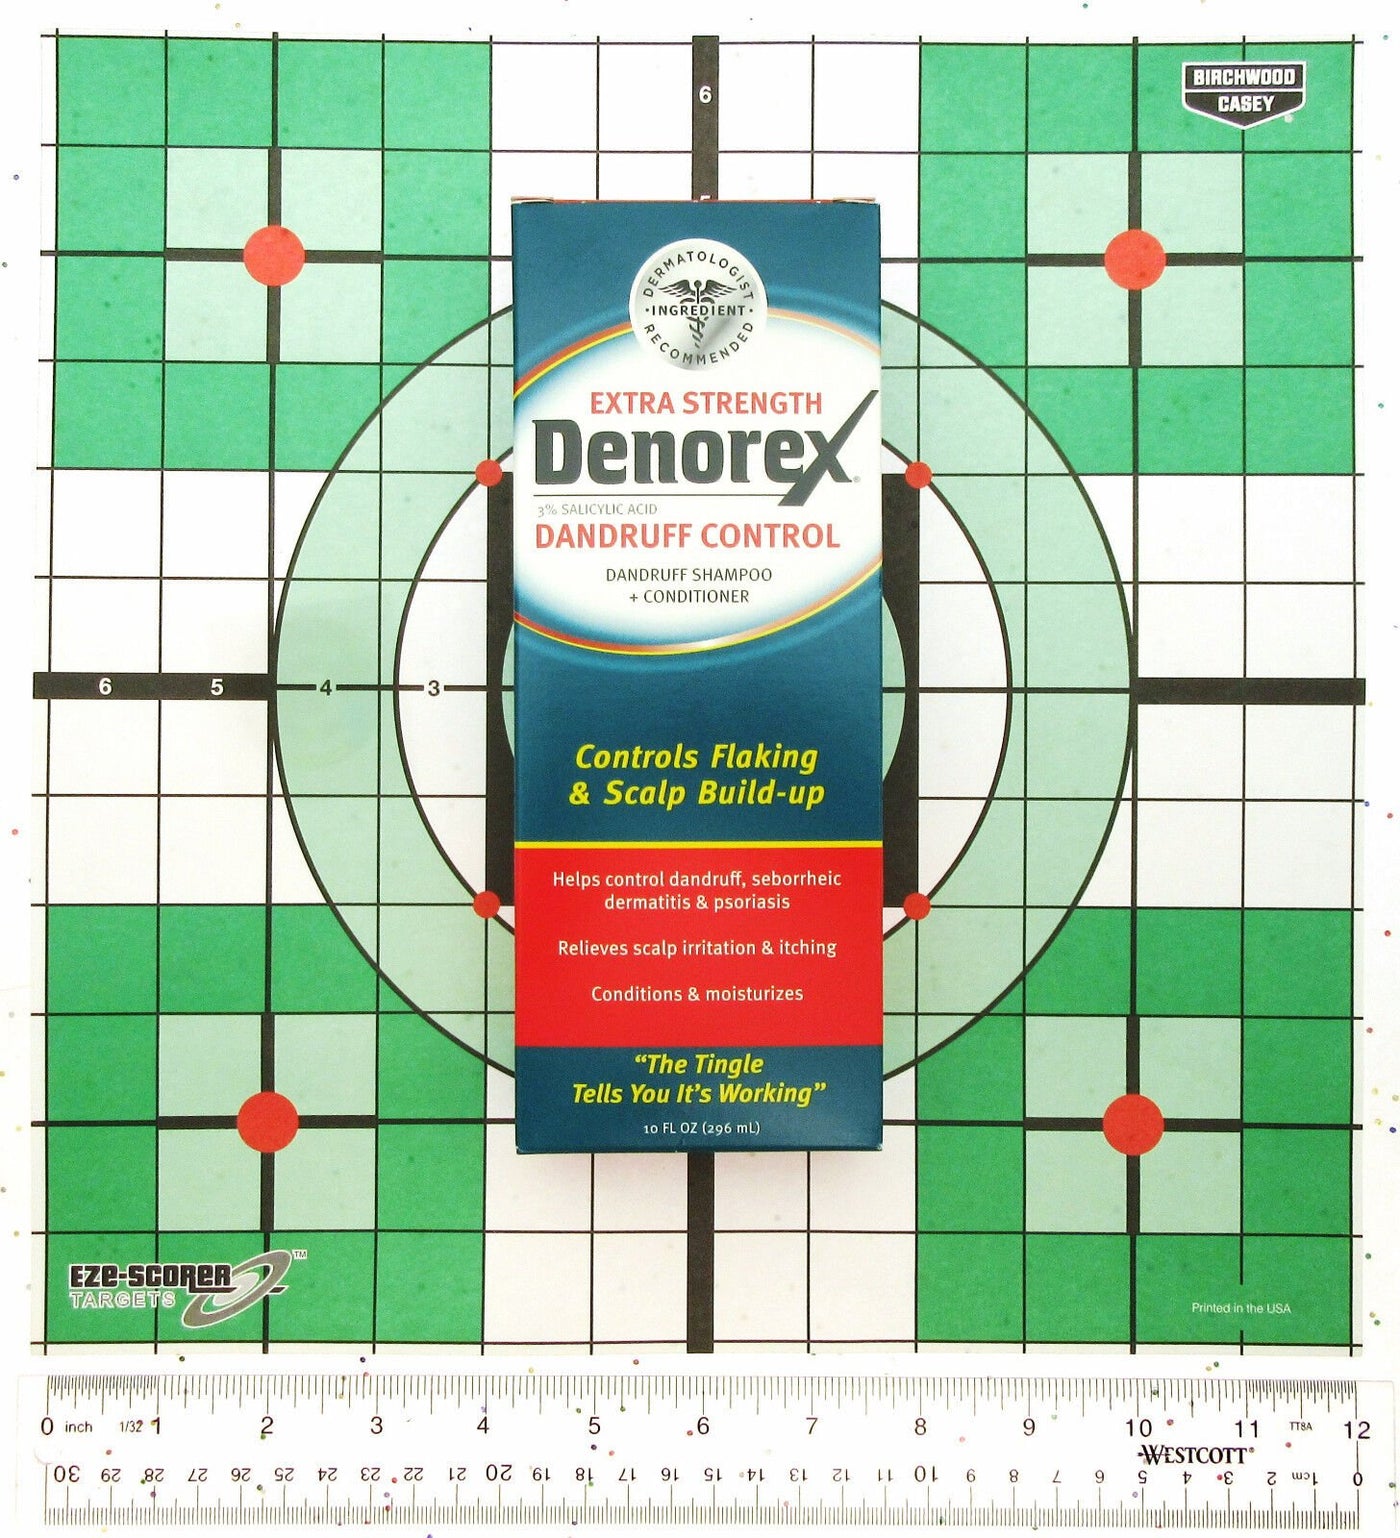 Denorex ~ Dandruff Control Shampoo with Salicylic Acid 3% ~ 10 fl oz